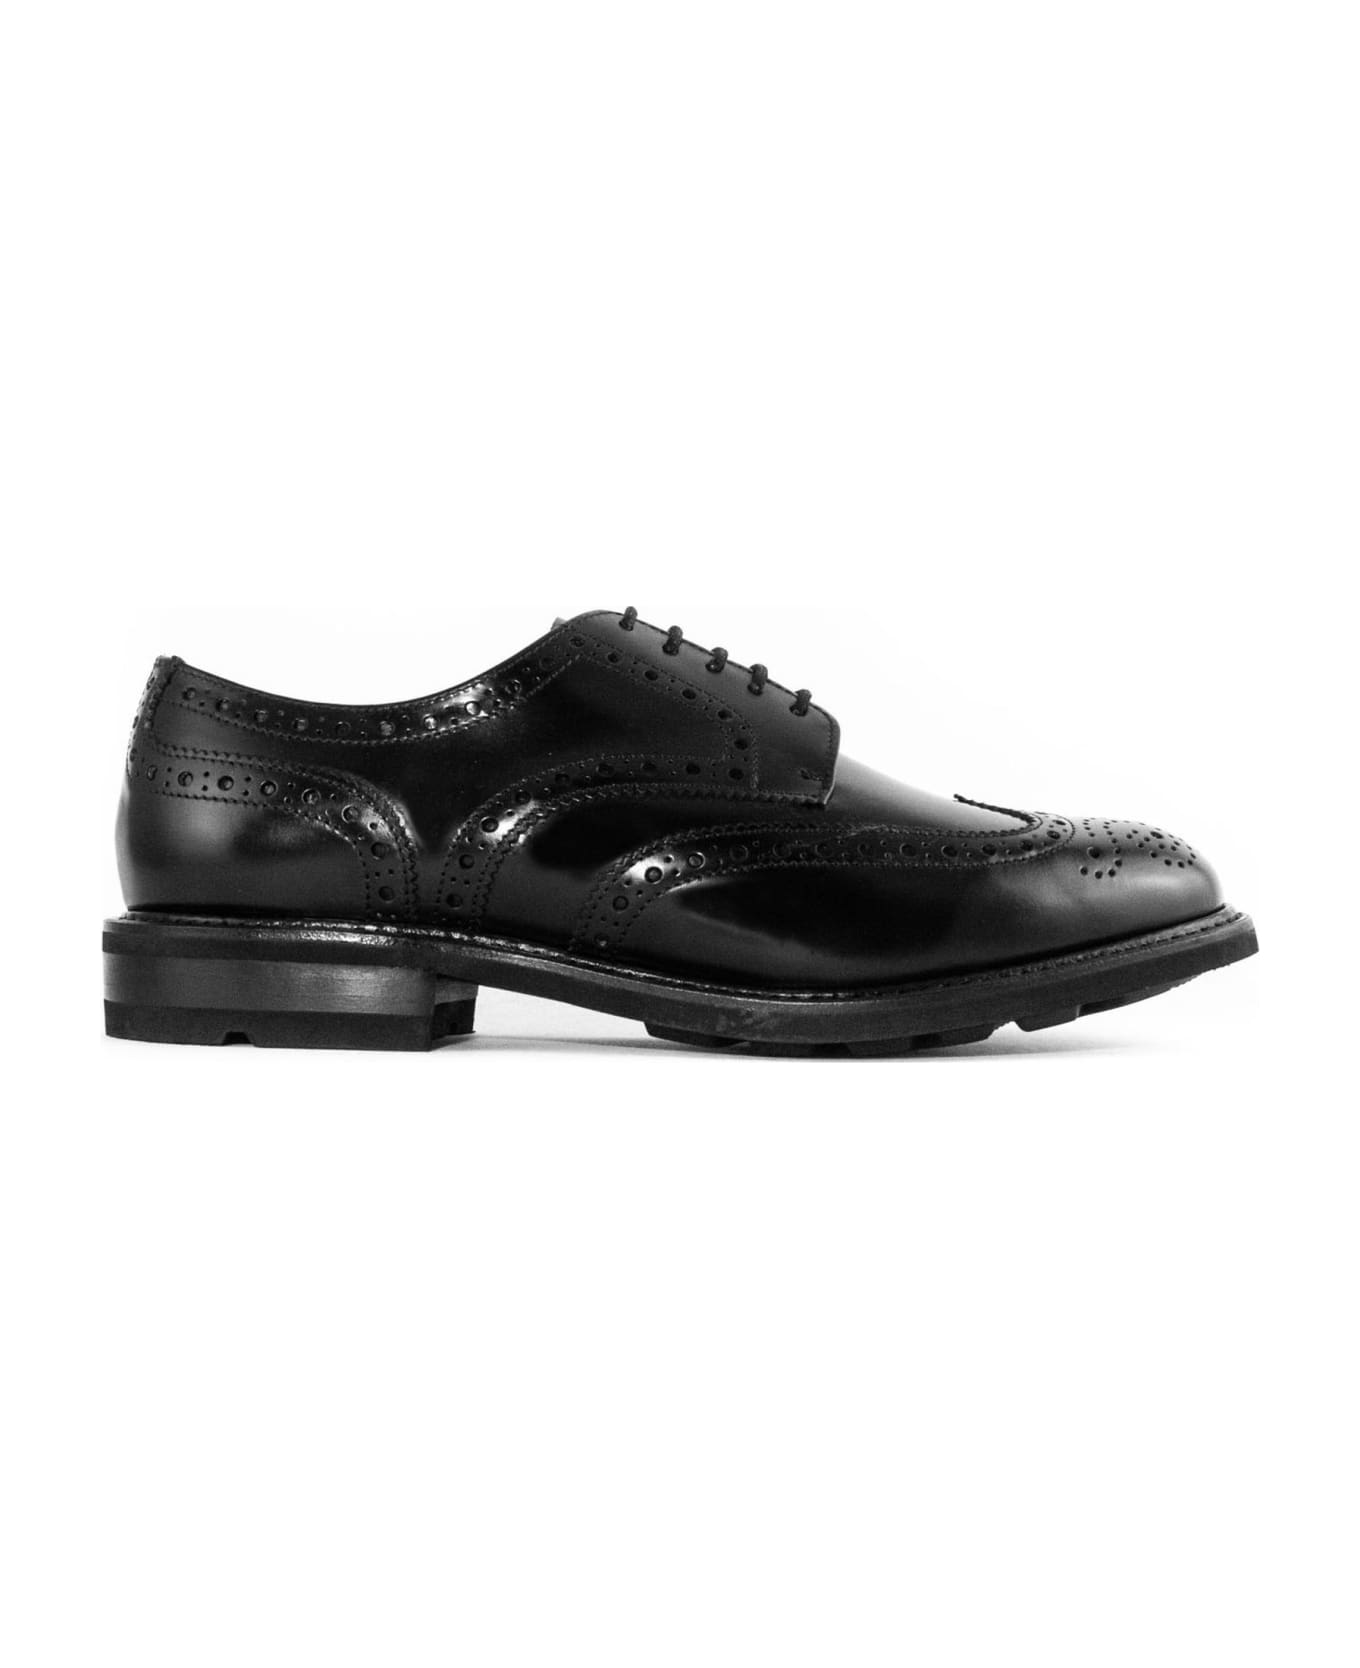 Berwick 1707 Black Shiny Leather Derby Shoes - Black